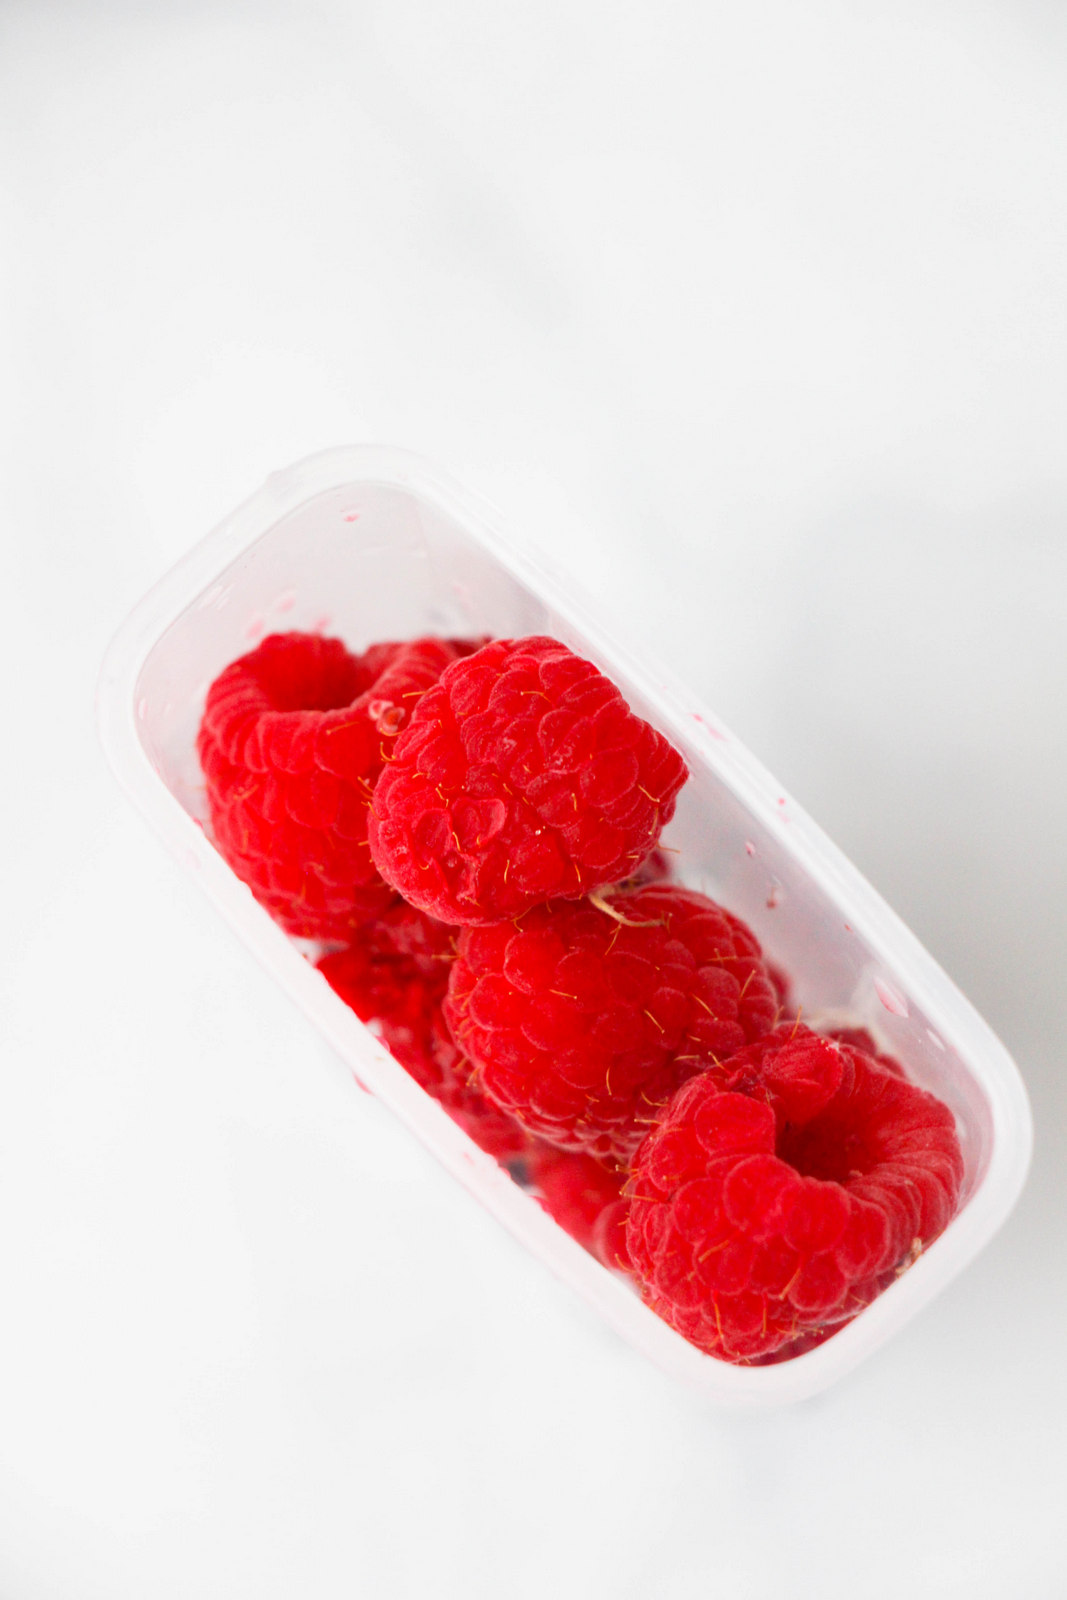 How To Make Patriotic Fruit Popsicles by popular Utah blogger Sandy A La Mode